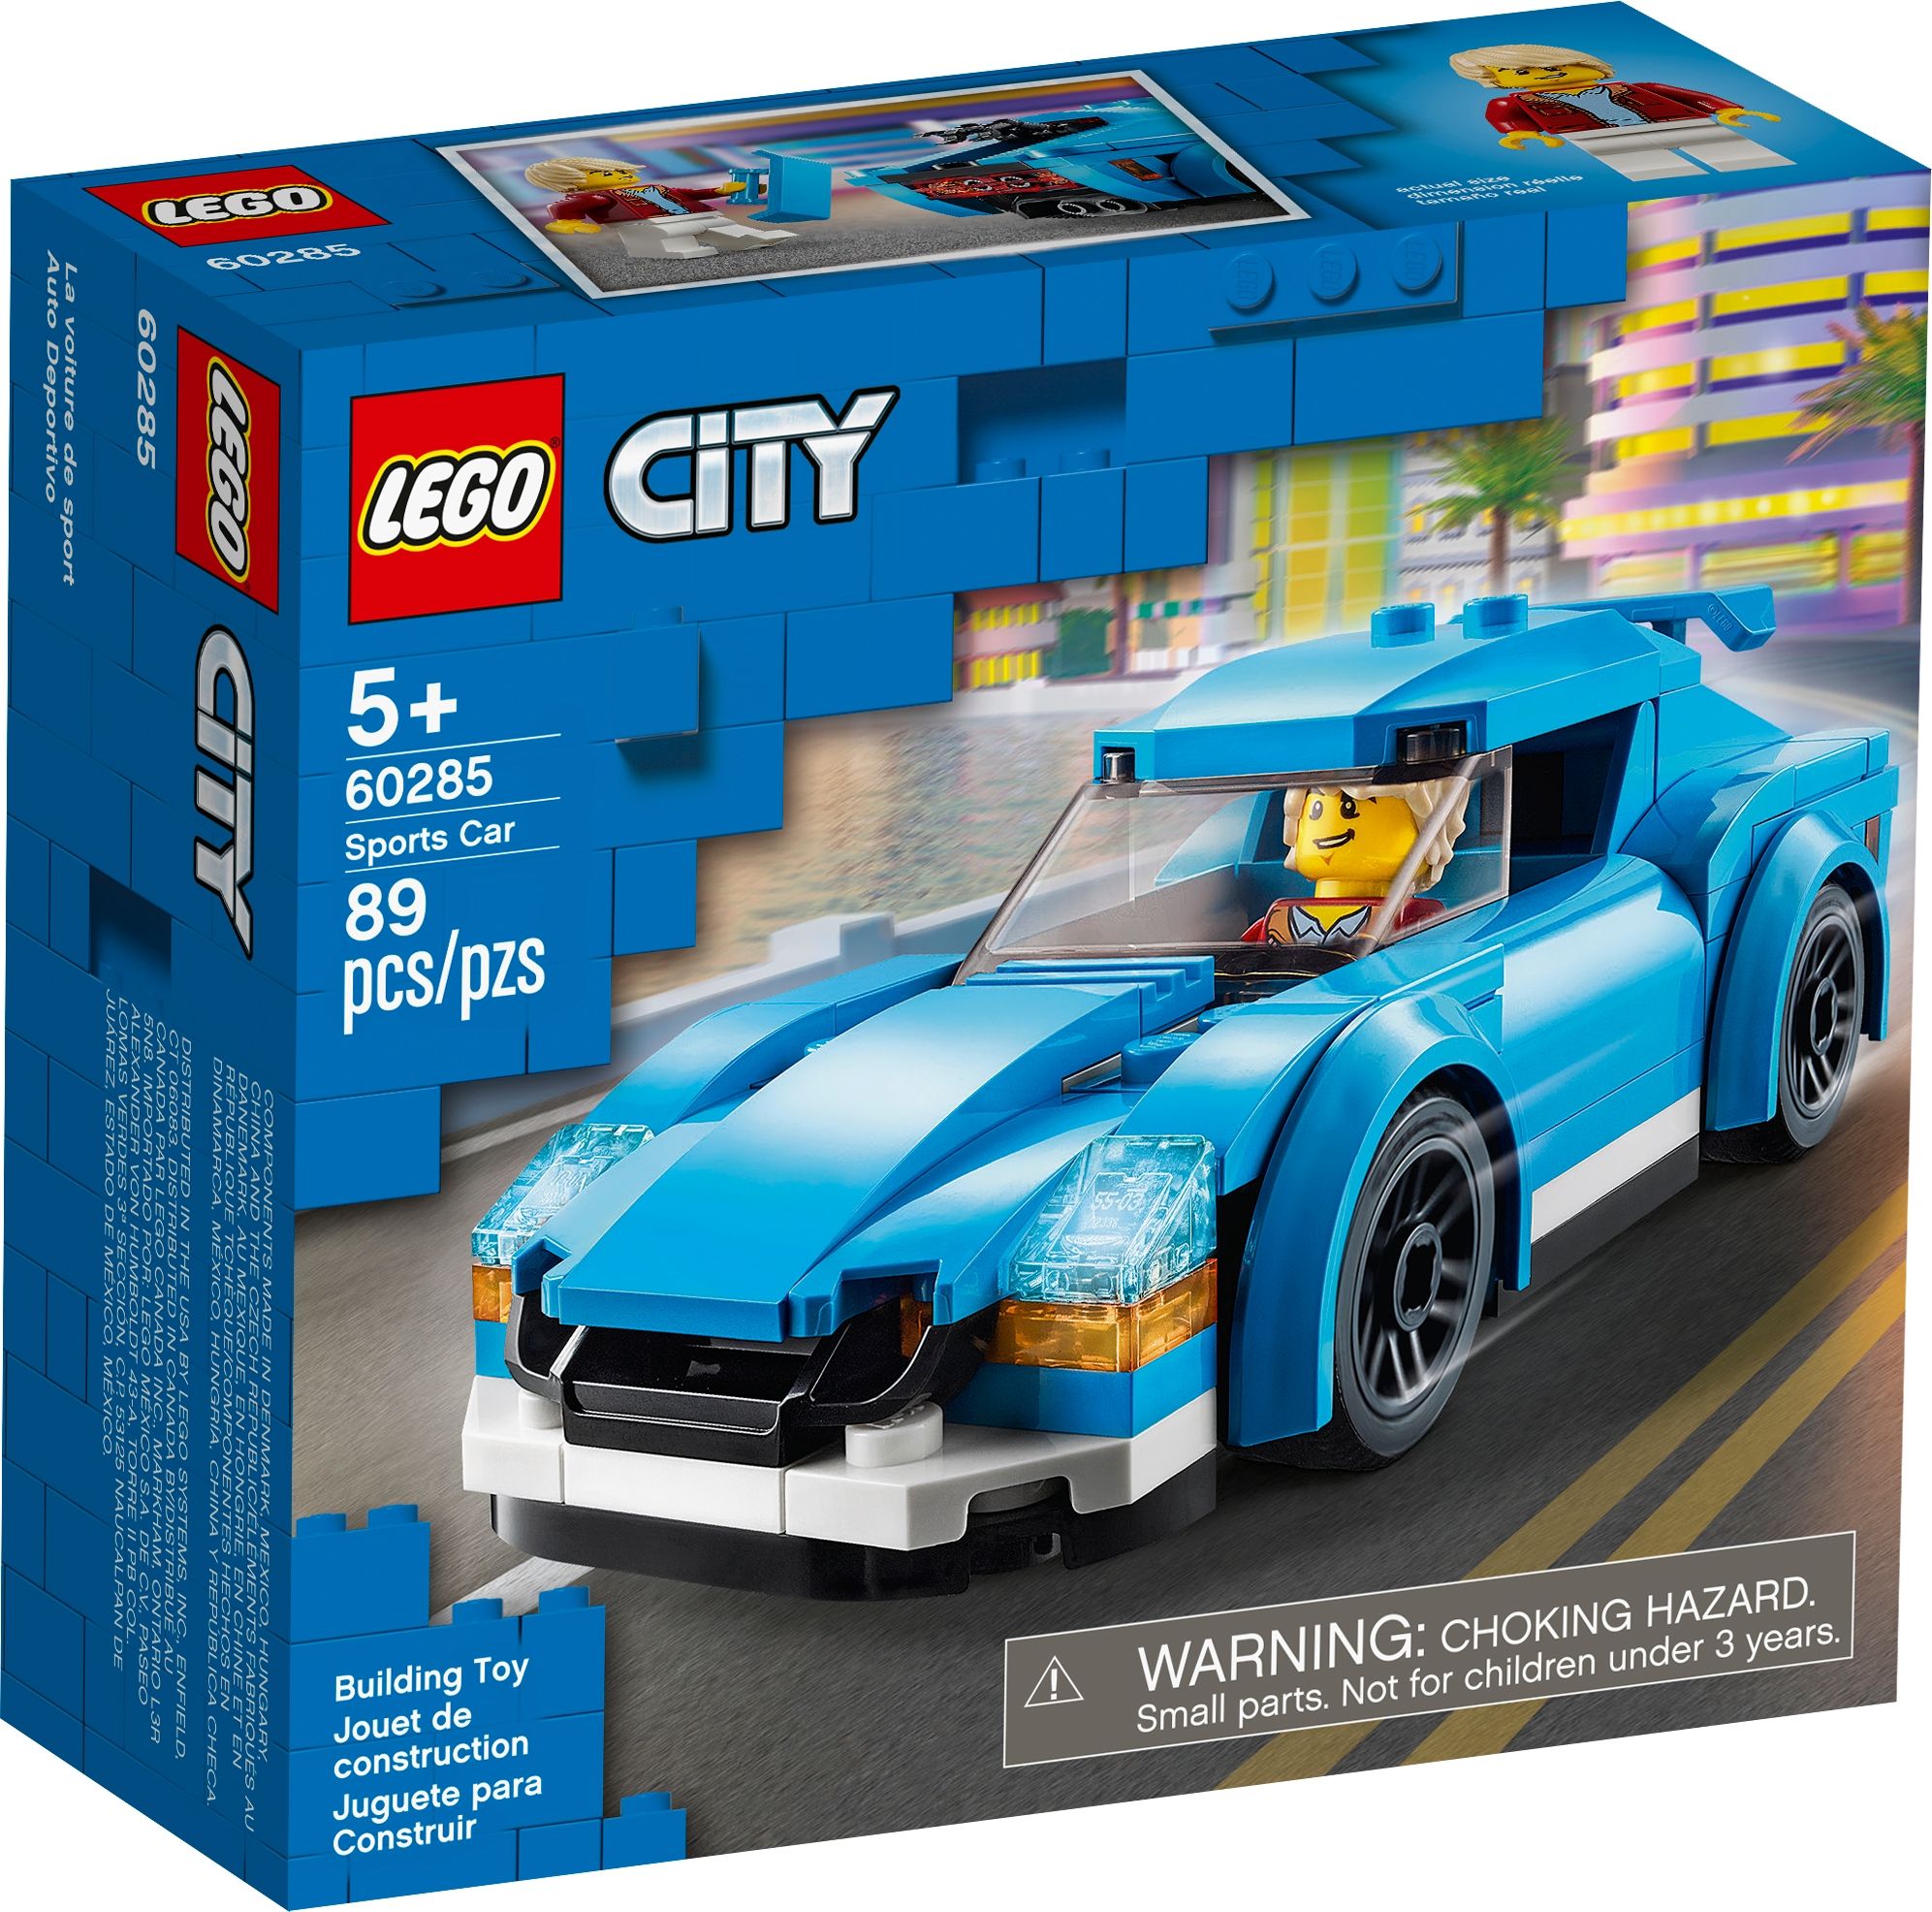 LEGO City 60285 Sportwagen LEGO_60285_alt1.jpg